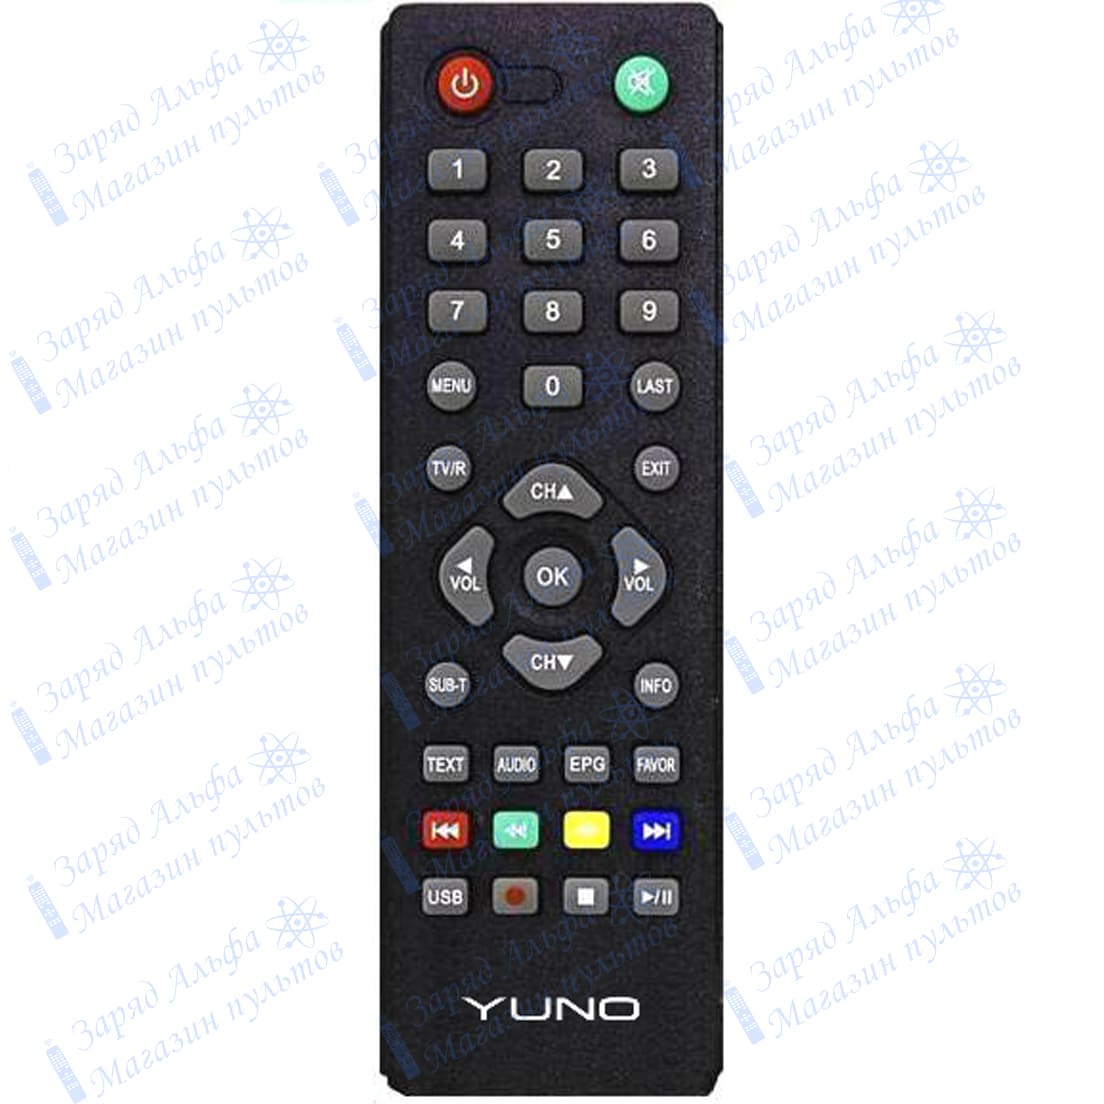 Пульт к Yuno DVT-1102 для цифровой приставки ресивера DVB-T2